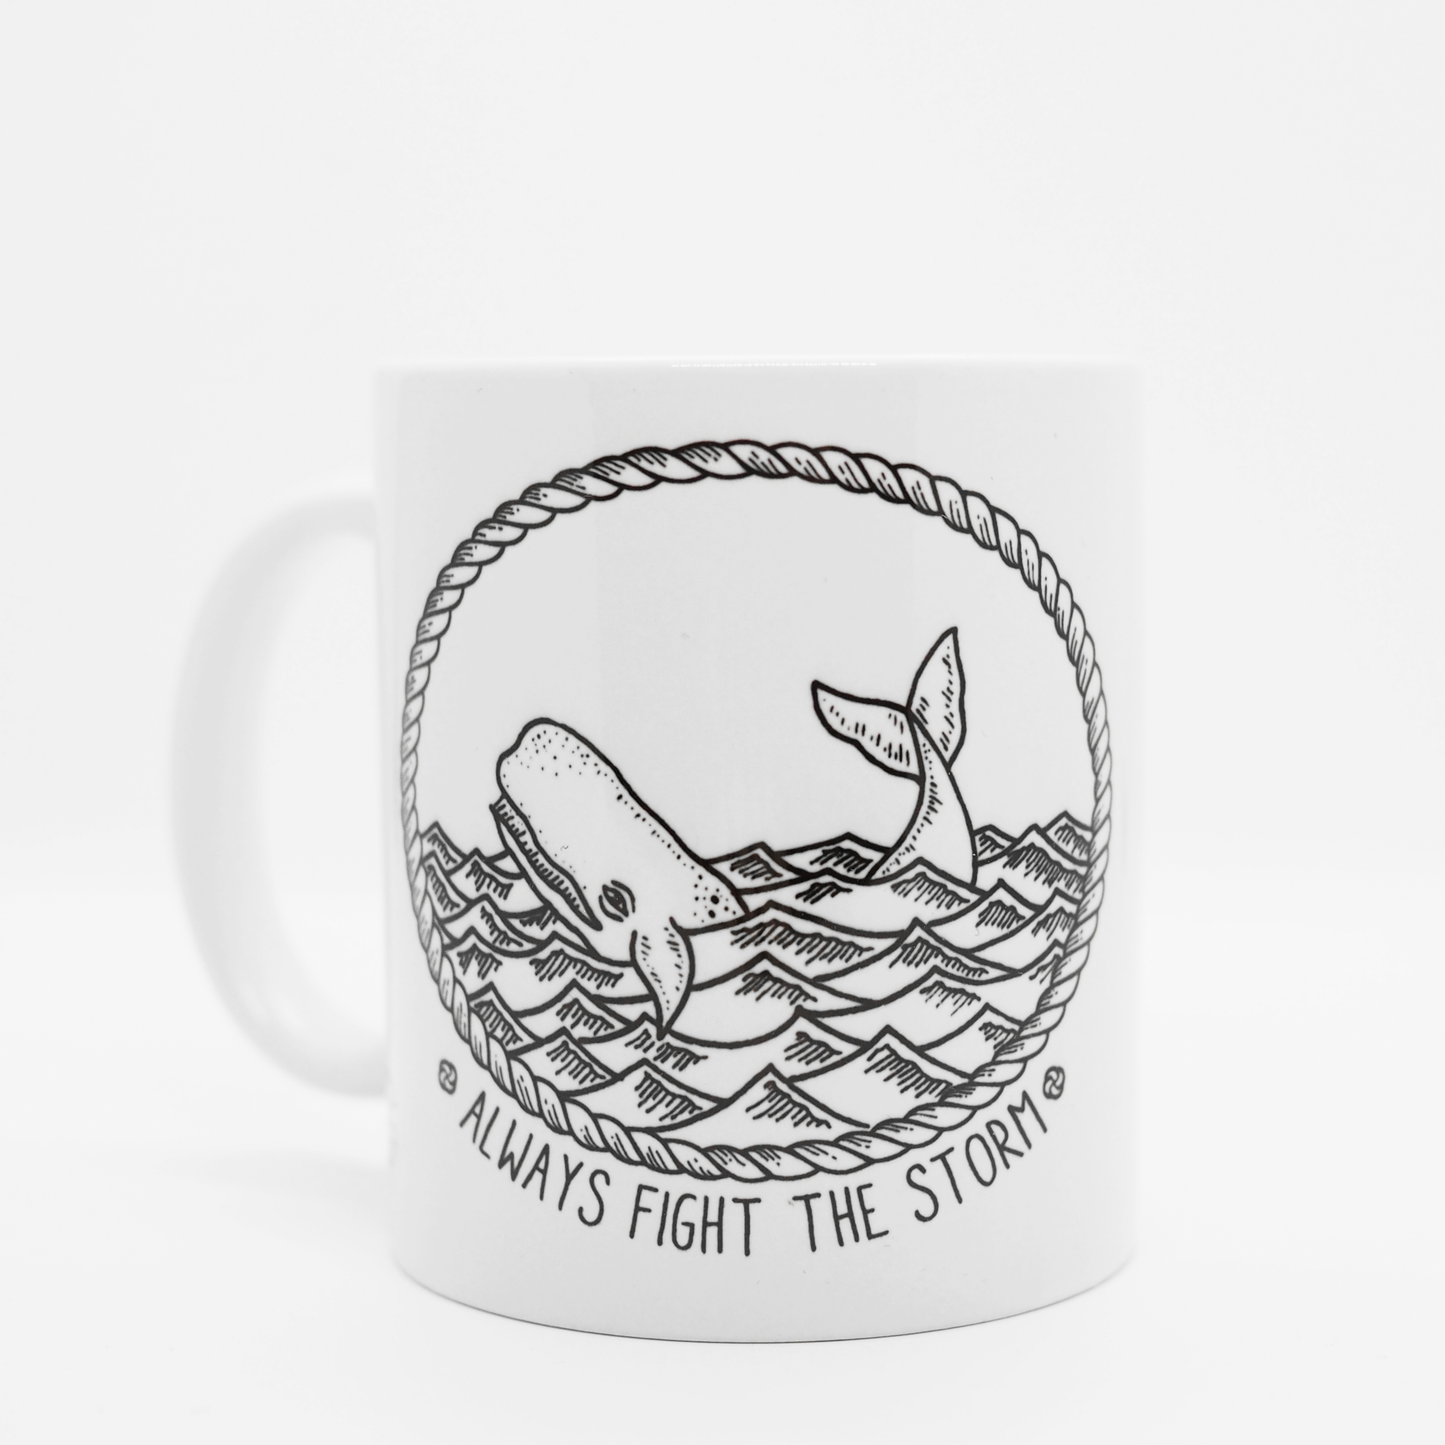 Always Fight The Storm - Ceramic Mug